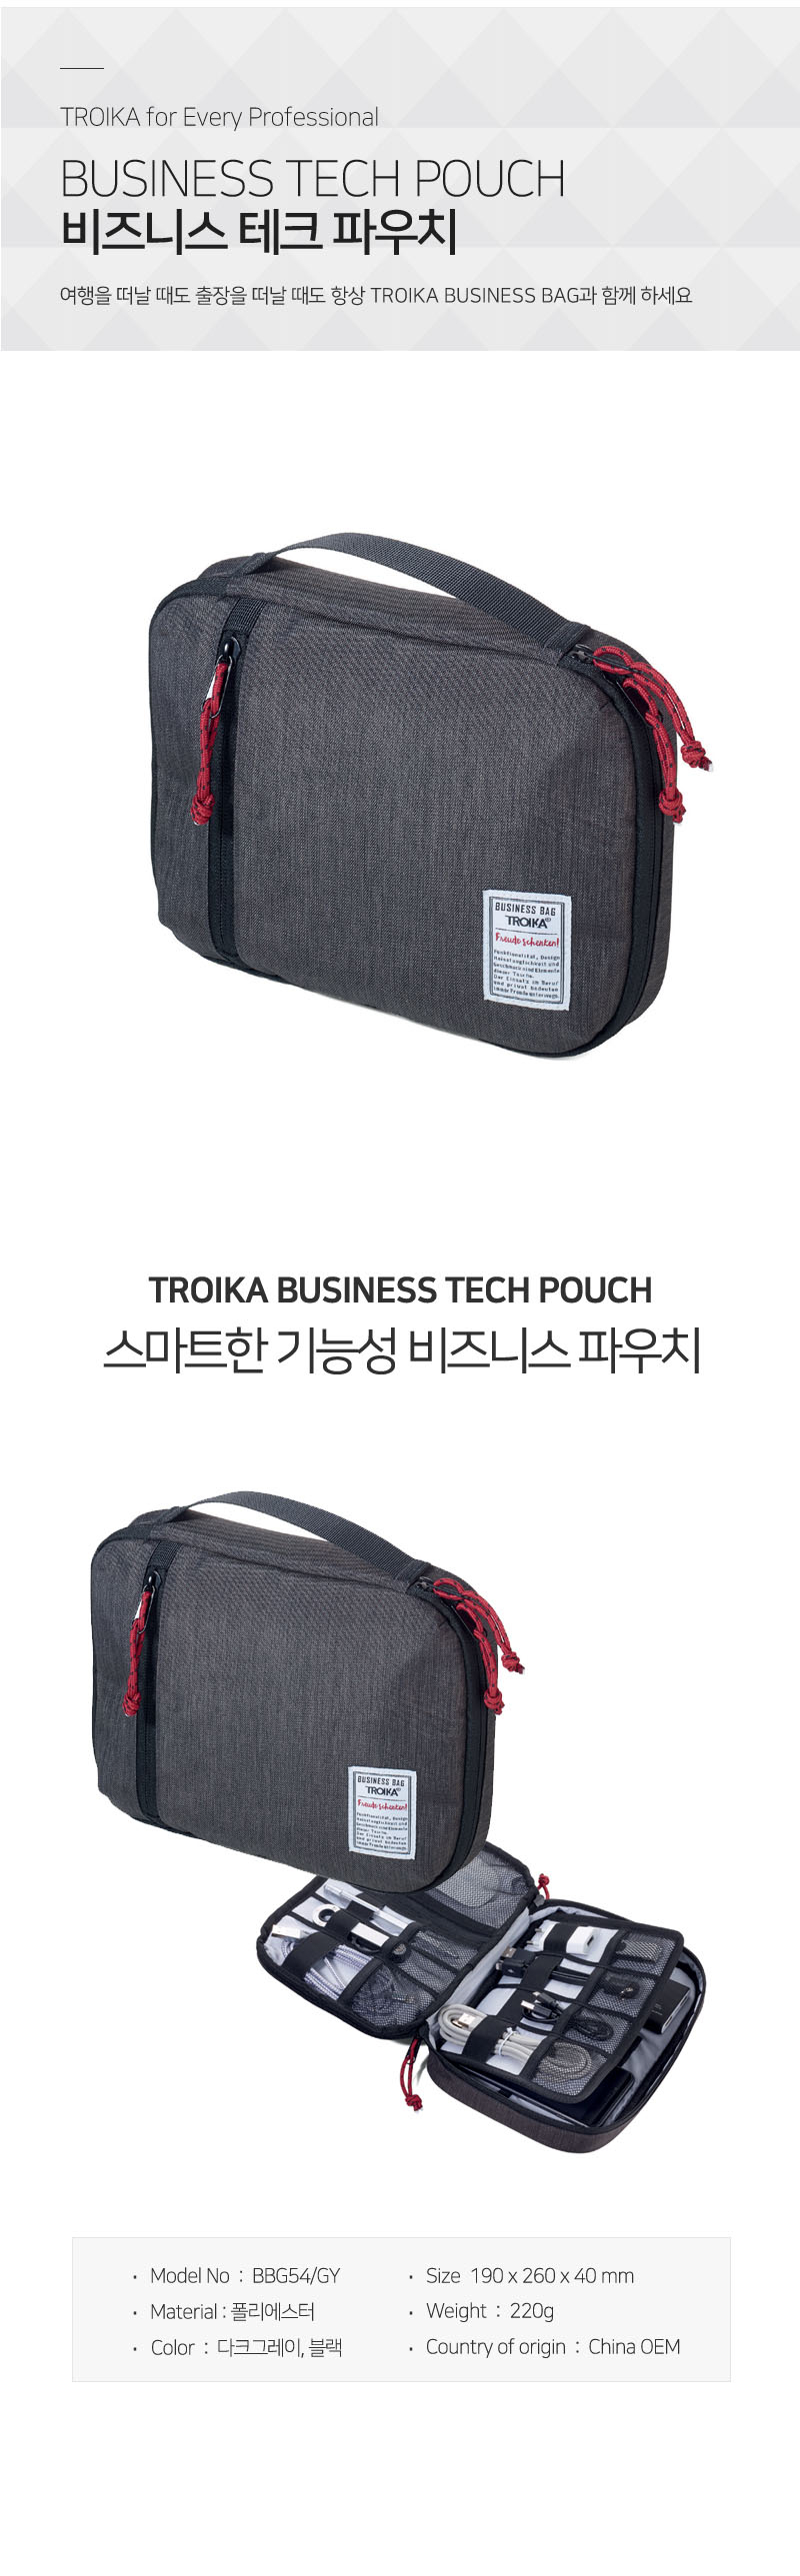 Troika Business Tech Pouch